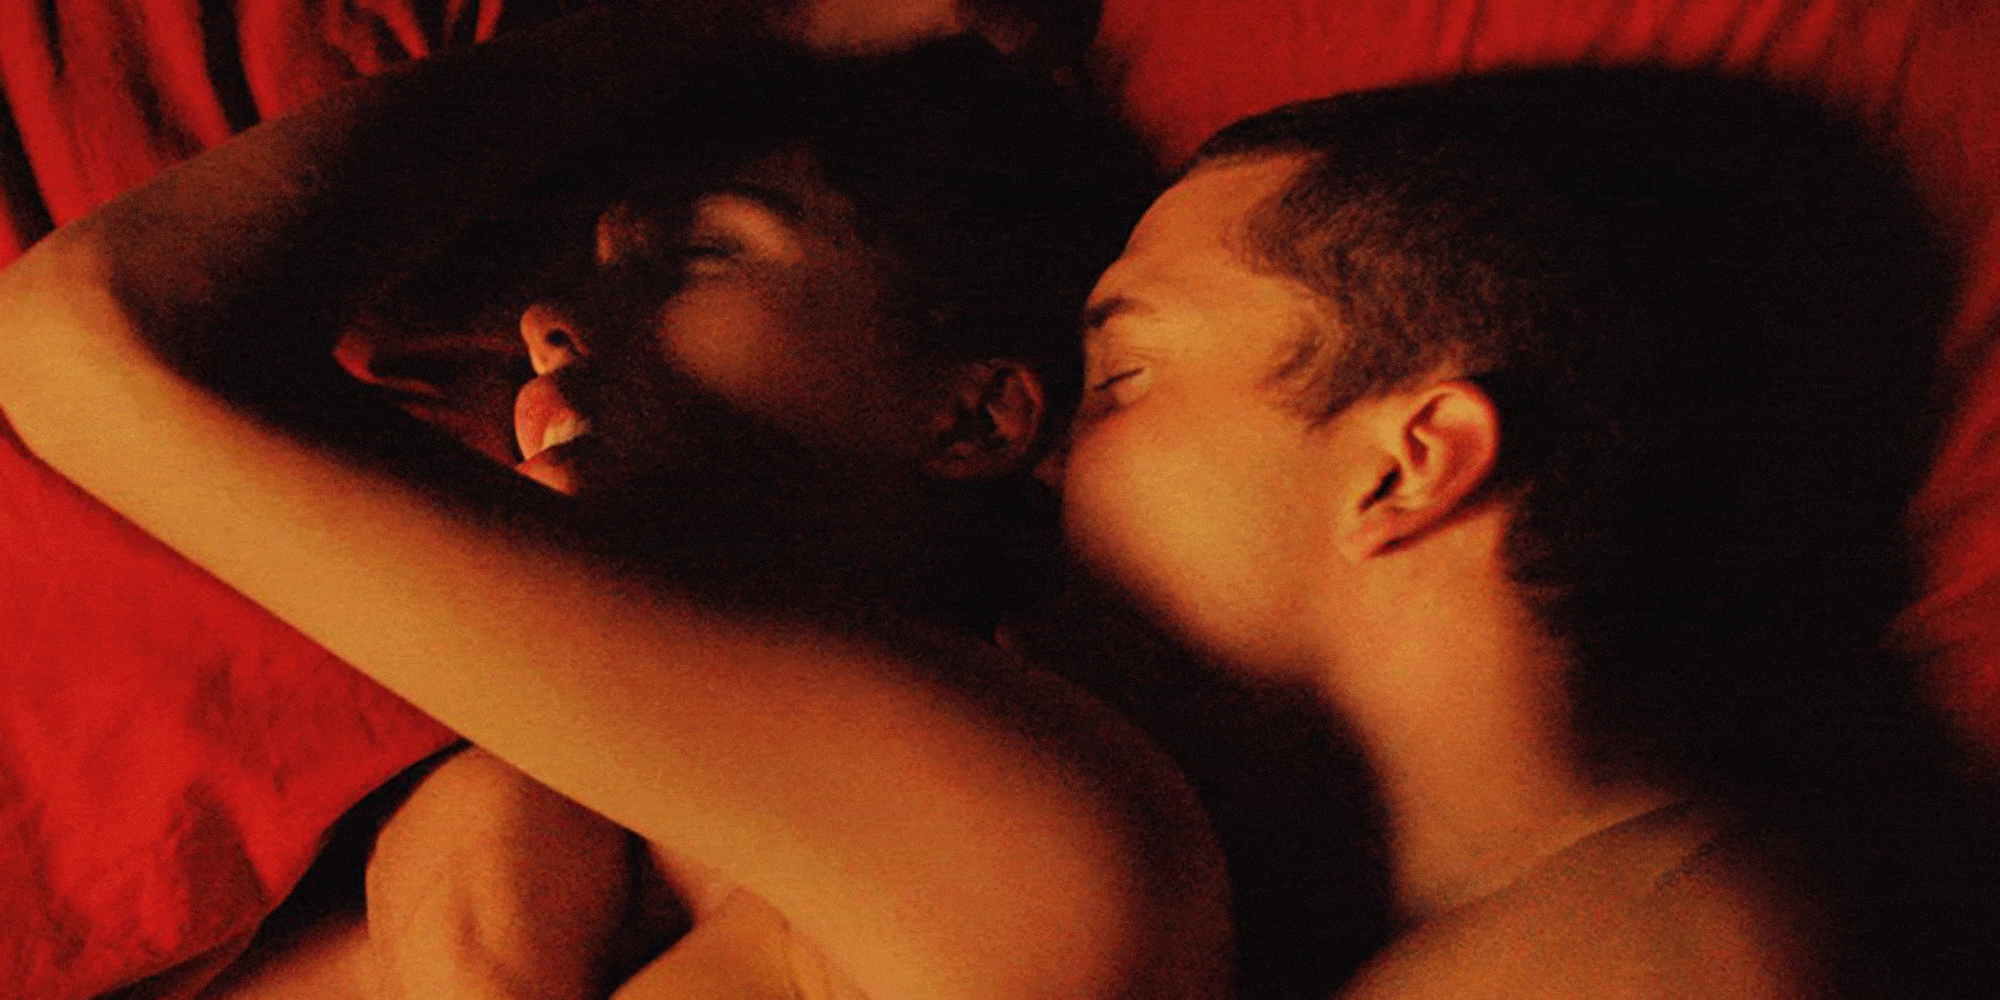 Steamiest interracial sex scenes on netflix